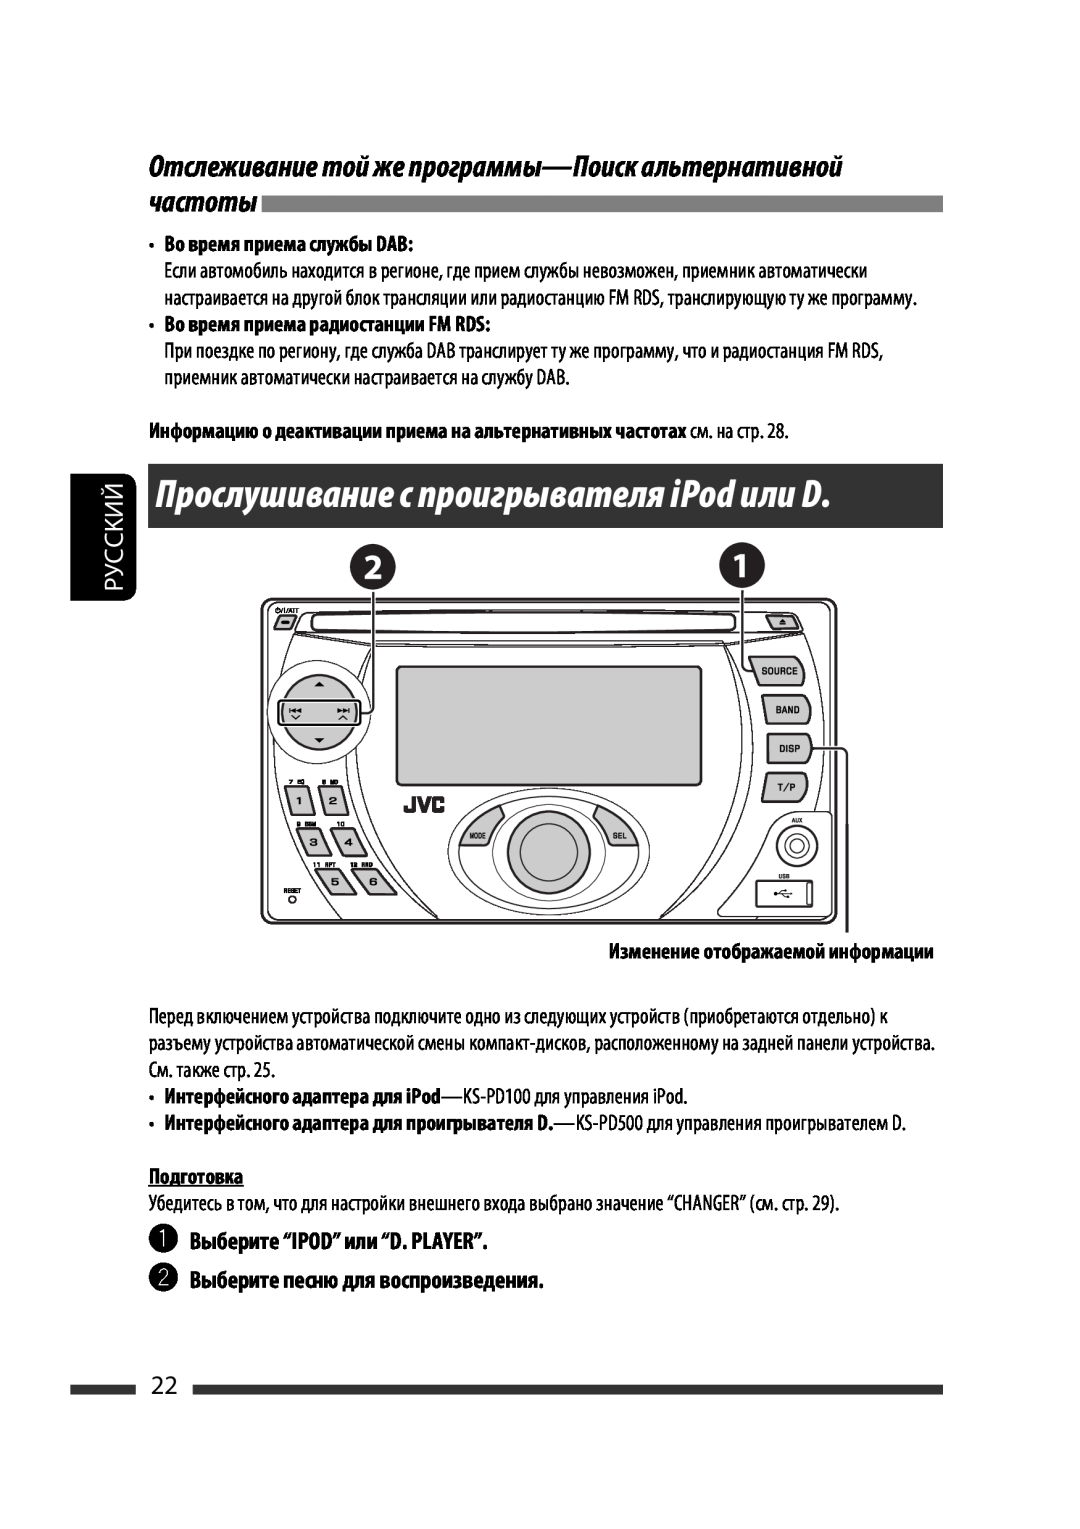 JVC KW-XG701 manual Прослушивание с проигрывателя iPod или D, ~Выберите “IPOD” или “D. PLAYER”, Во время приема службы DAB 